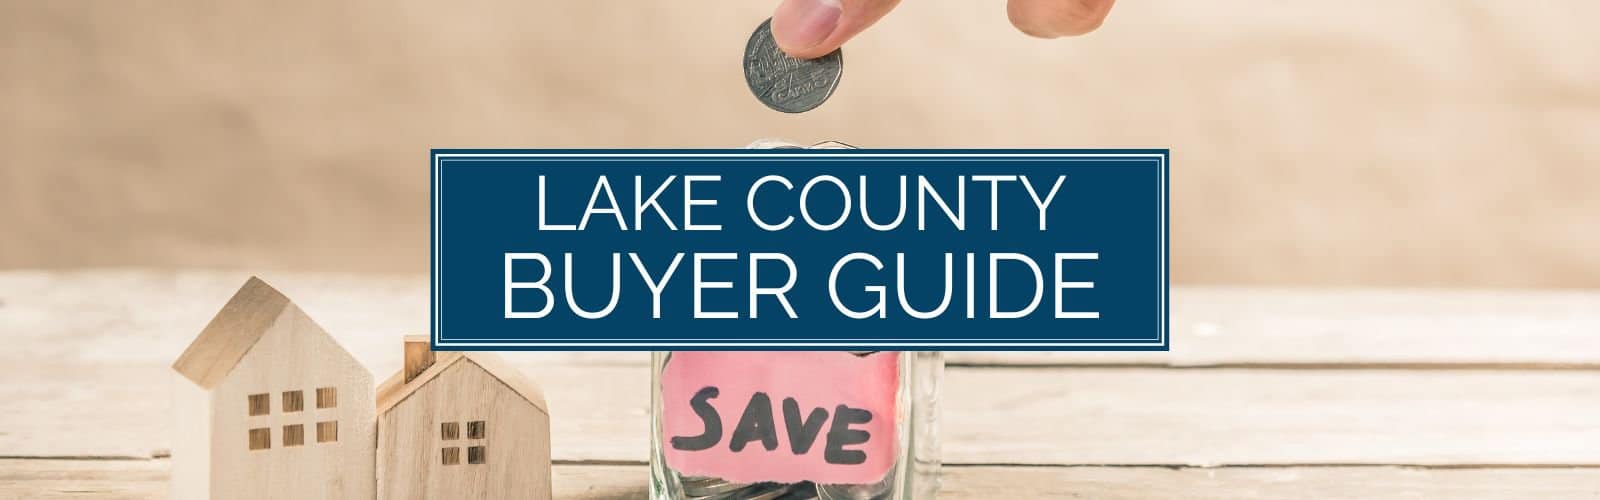 Lake County Buyer Guide